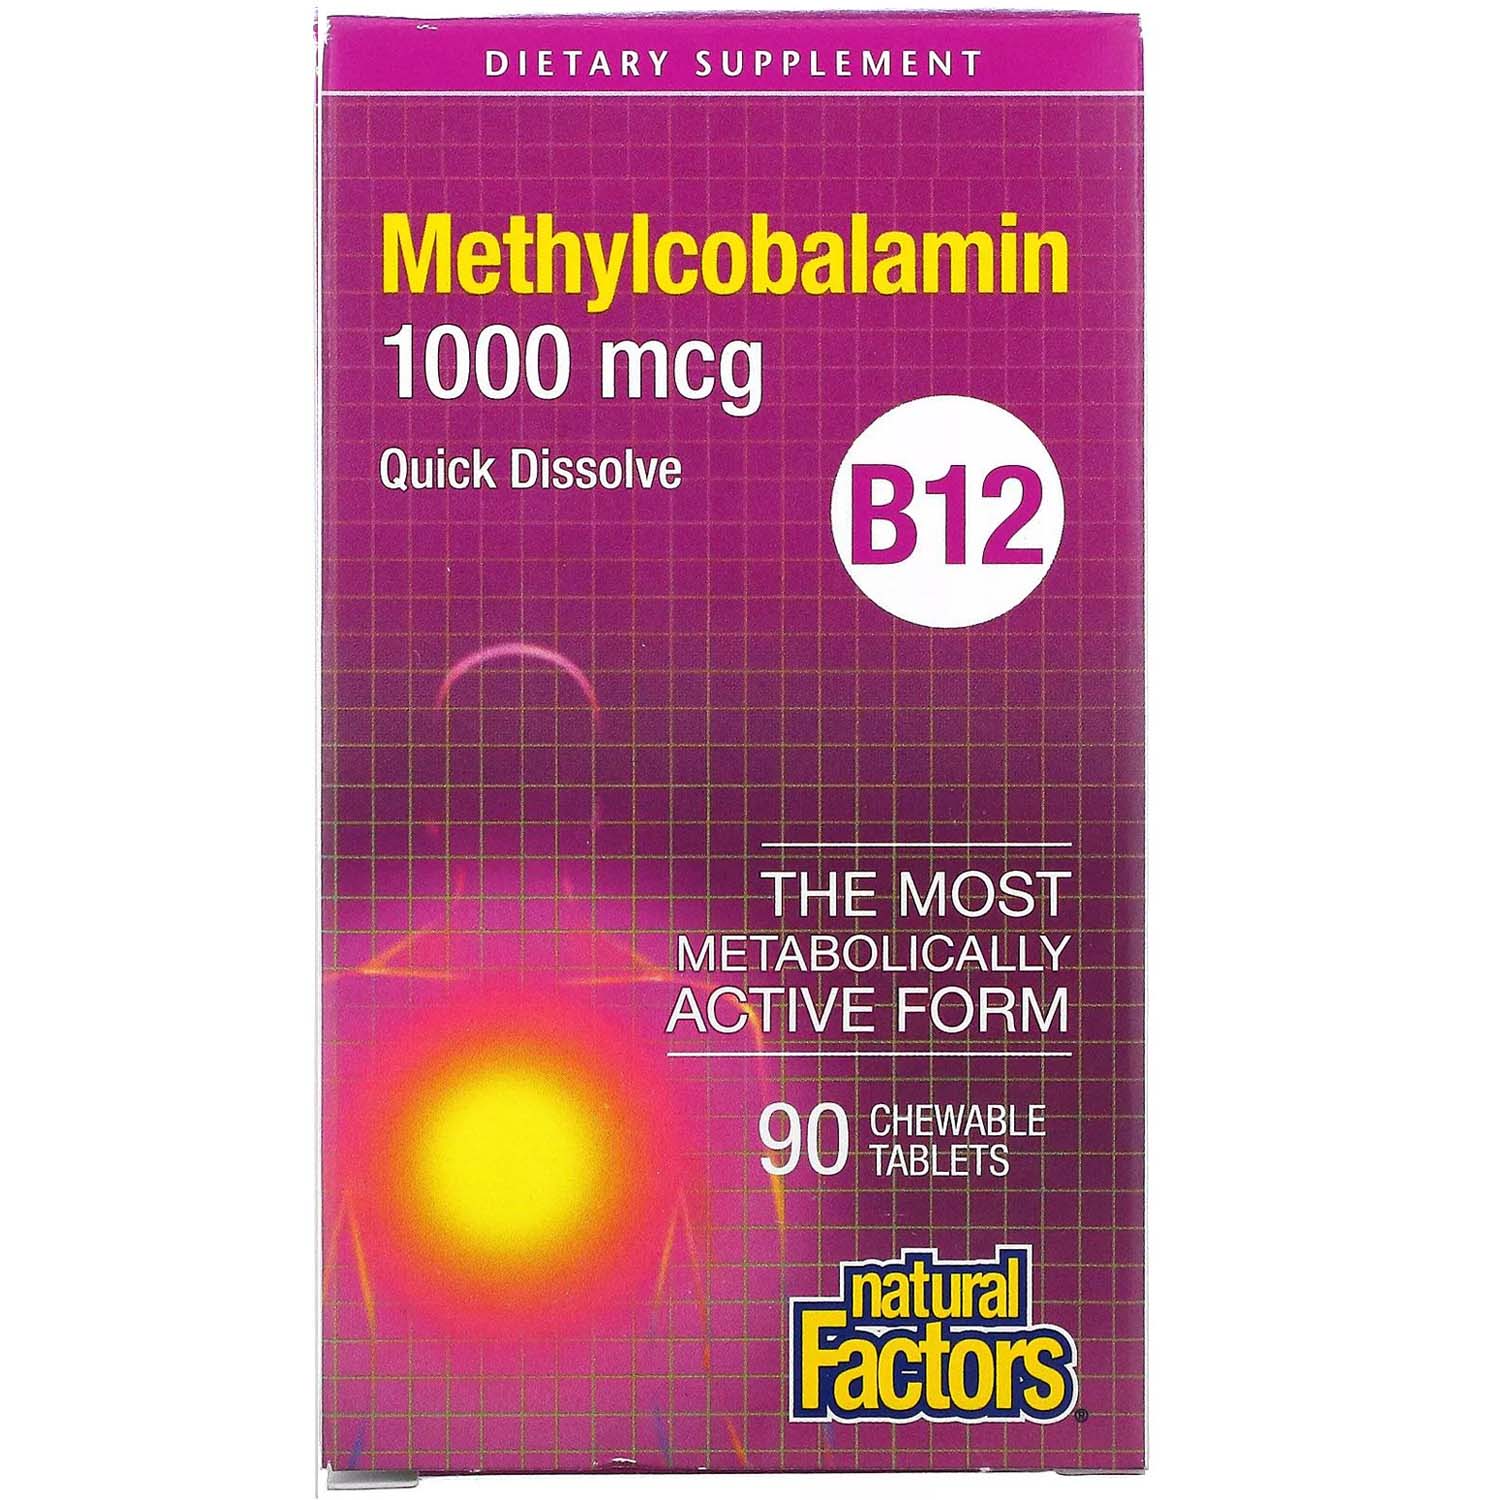 Natural Factors B12 Methylcobalamin 90 Chewable Tablets 1000 mcg